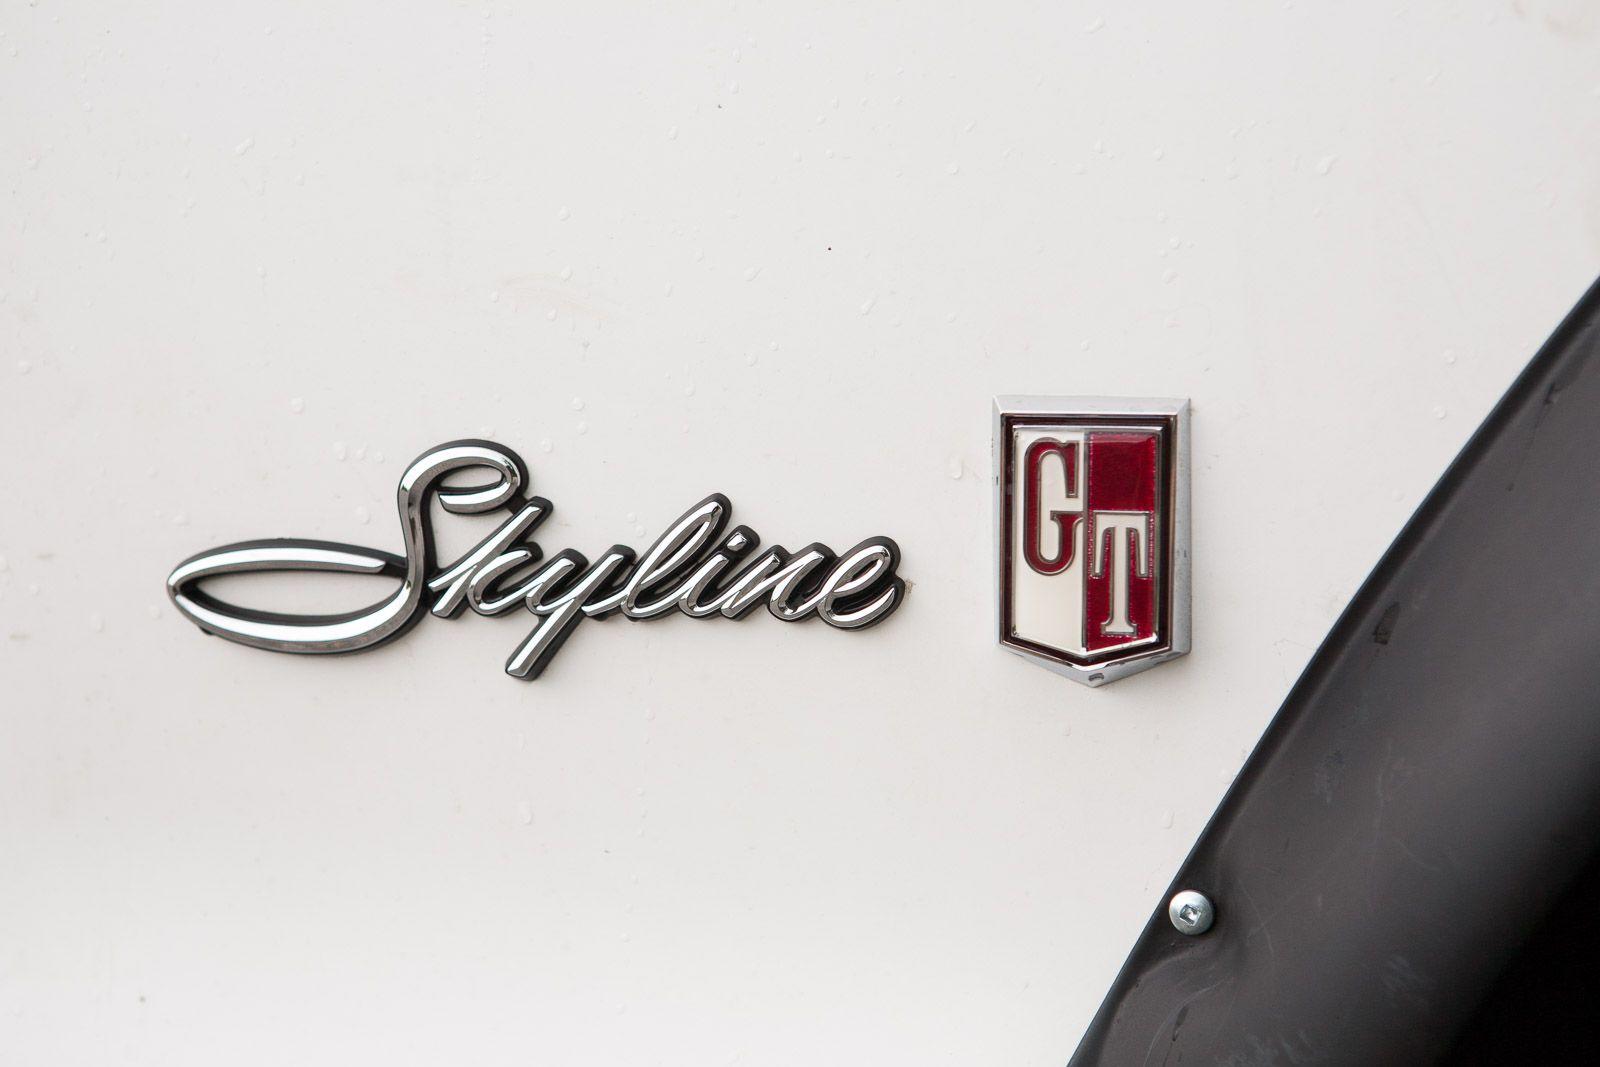 Nissan Skyline Logo - Nissan Skyline 2000GT / GT R Clone